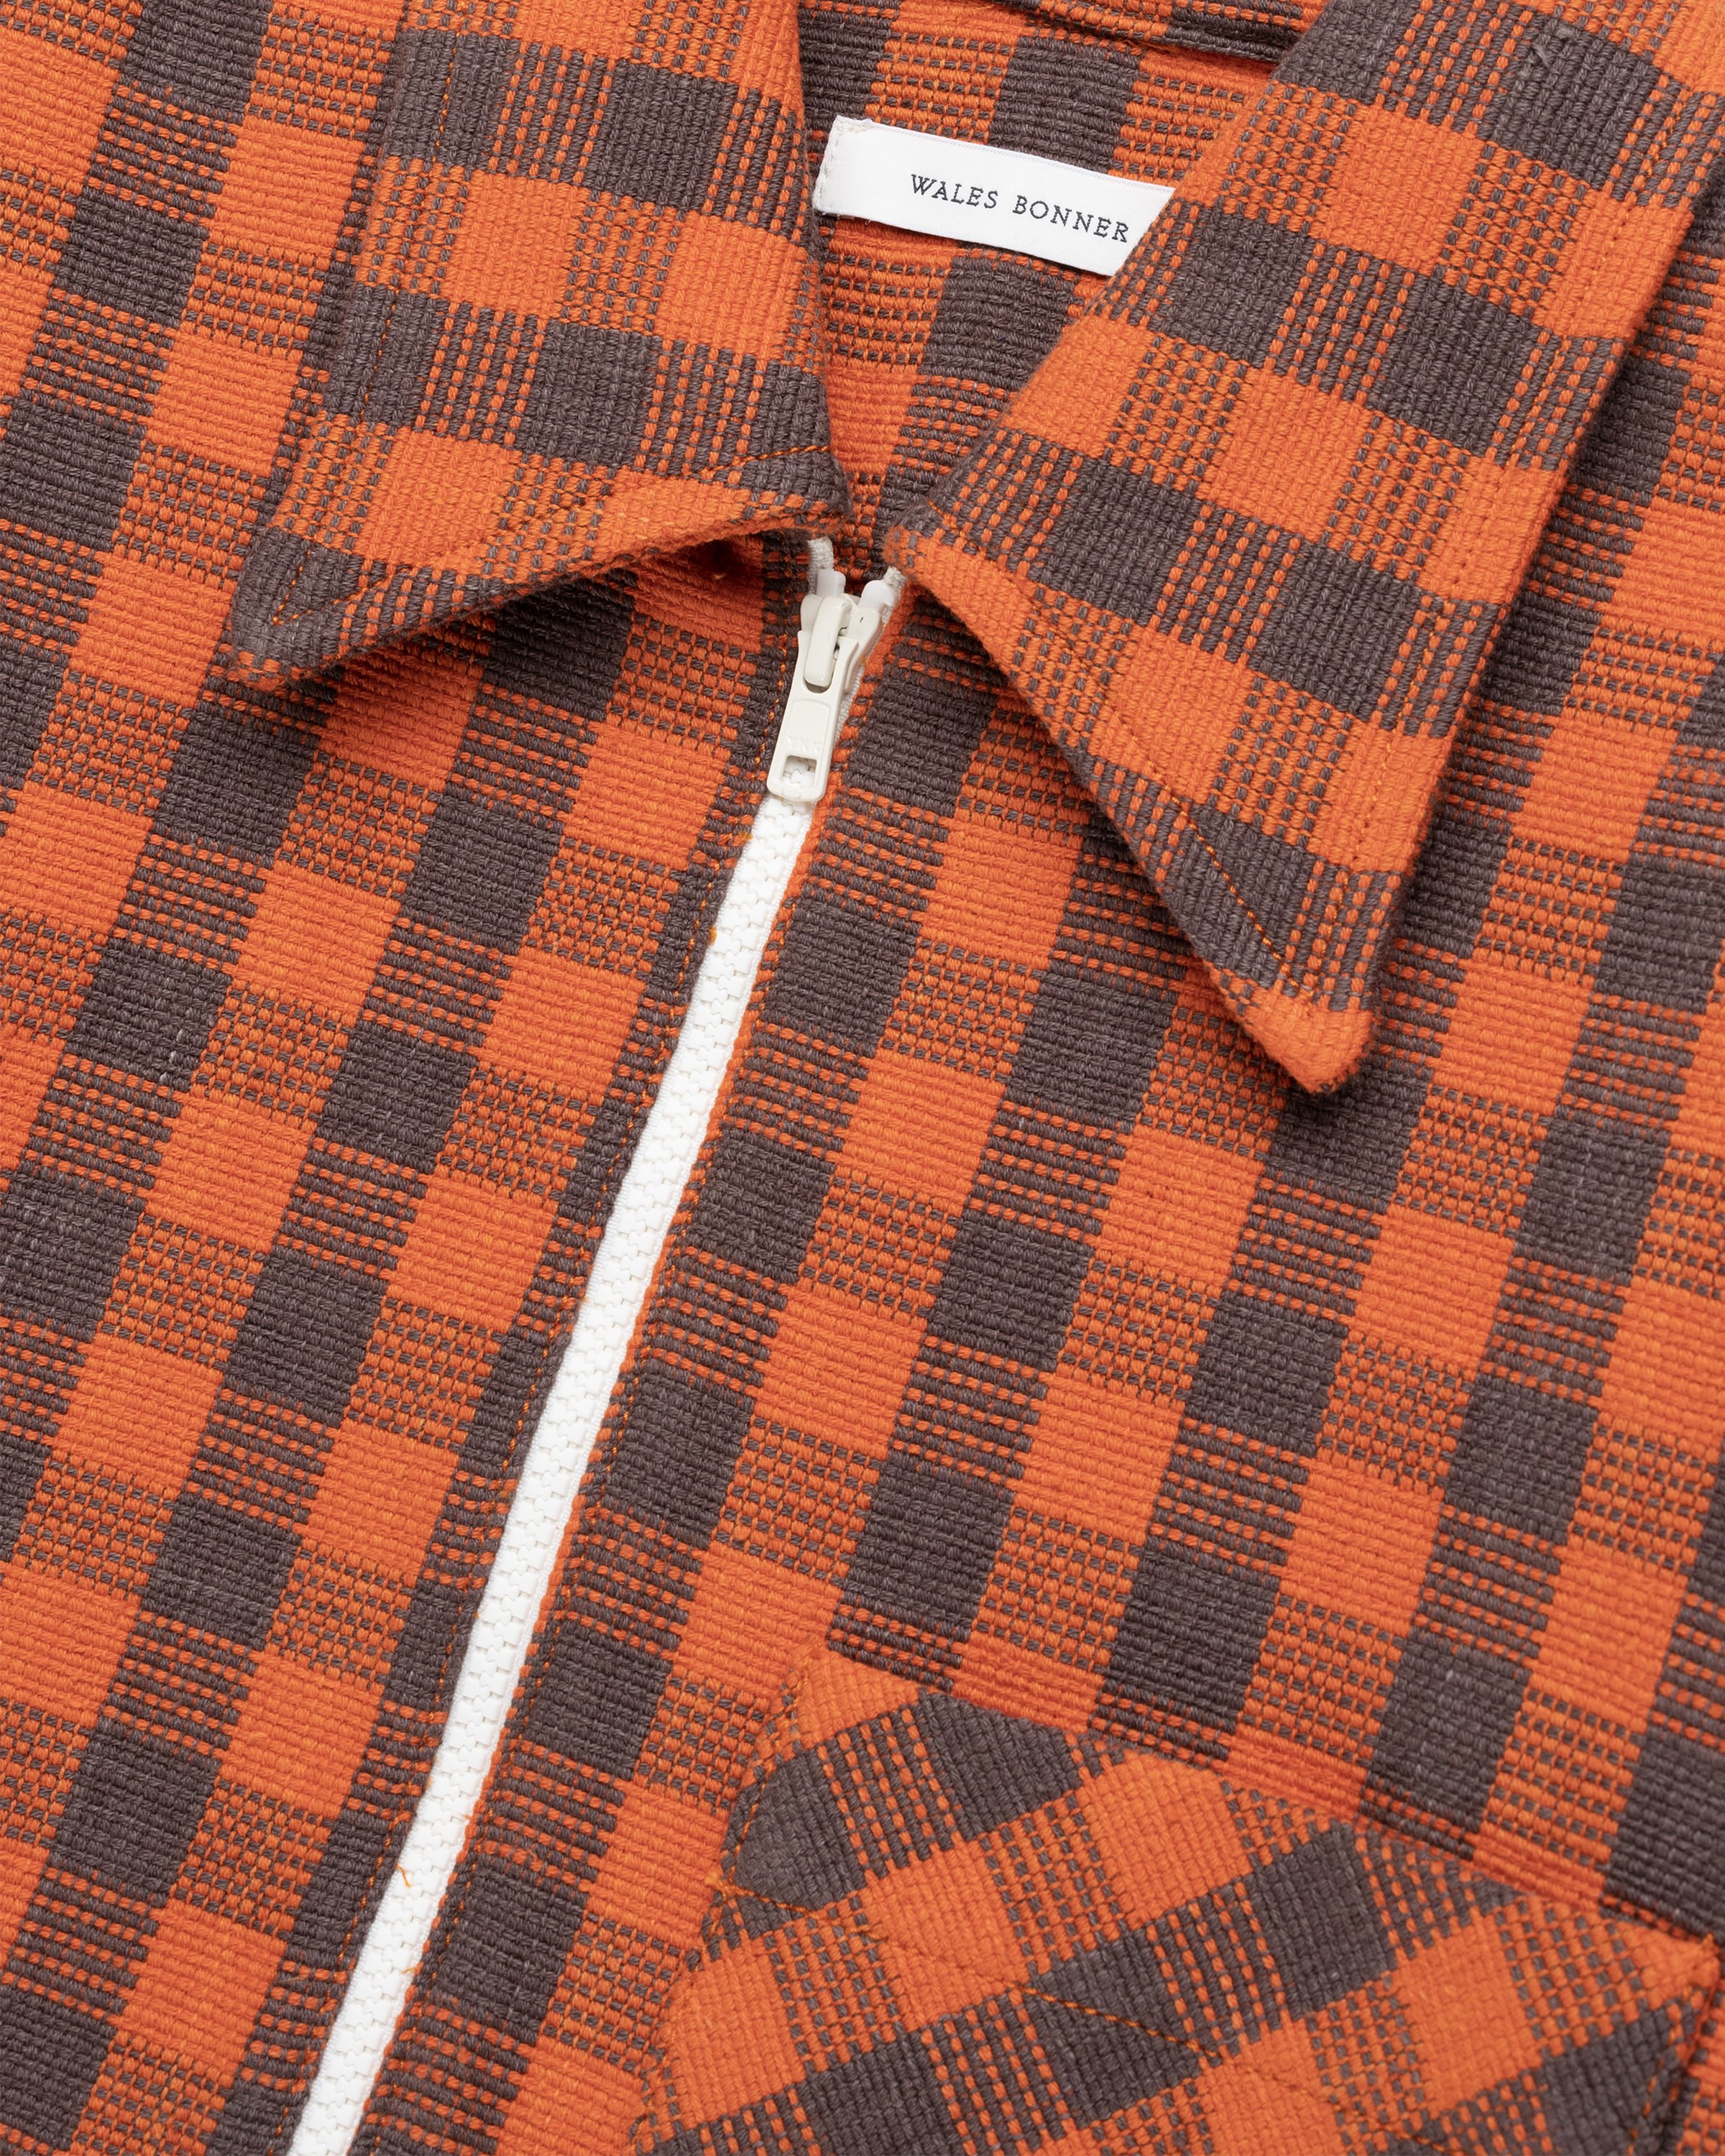 Wales Bonner - Études Jacket Cotton Check Orange/Brown - Clothing - Orange - Image 5